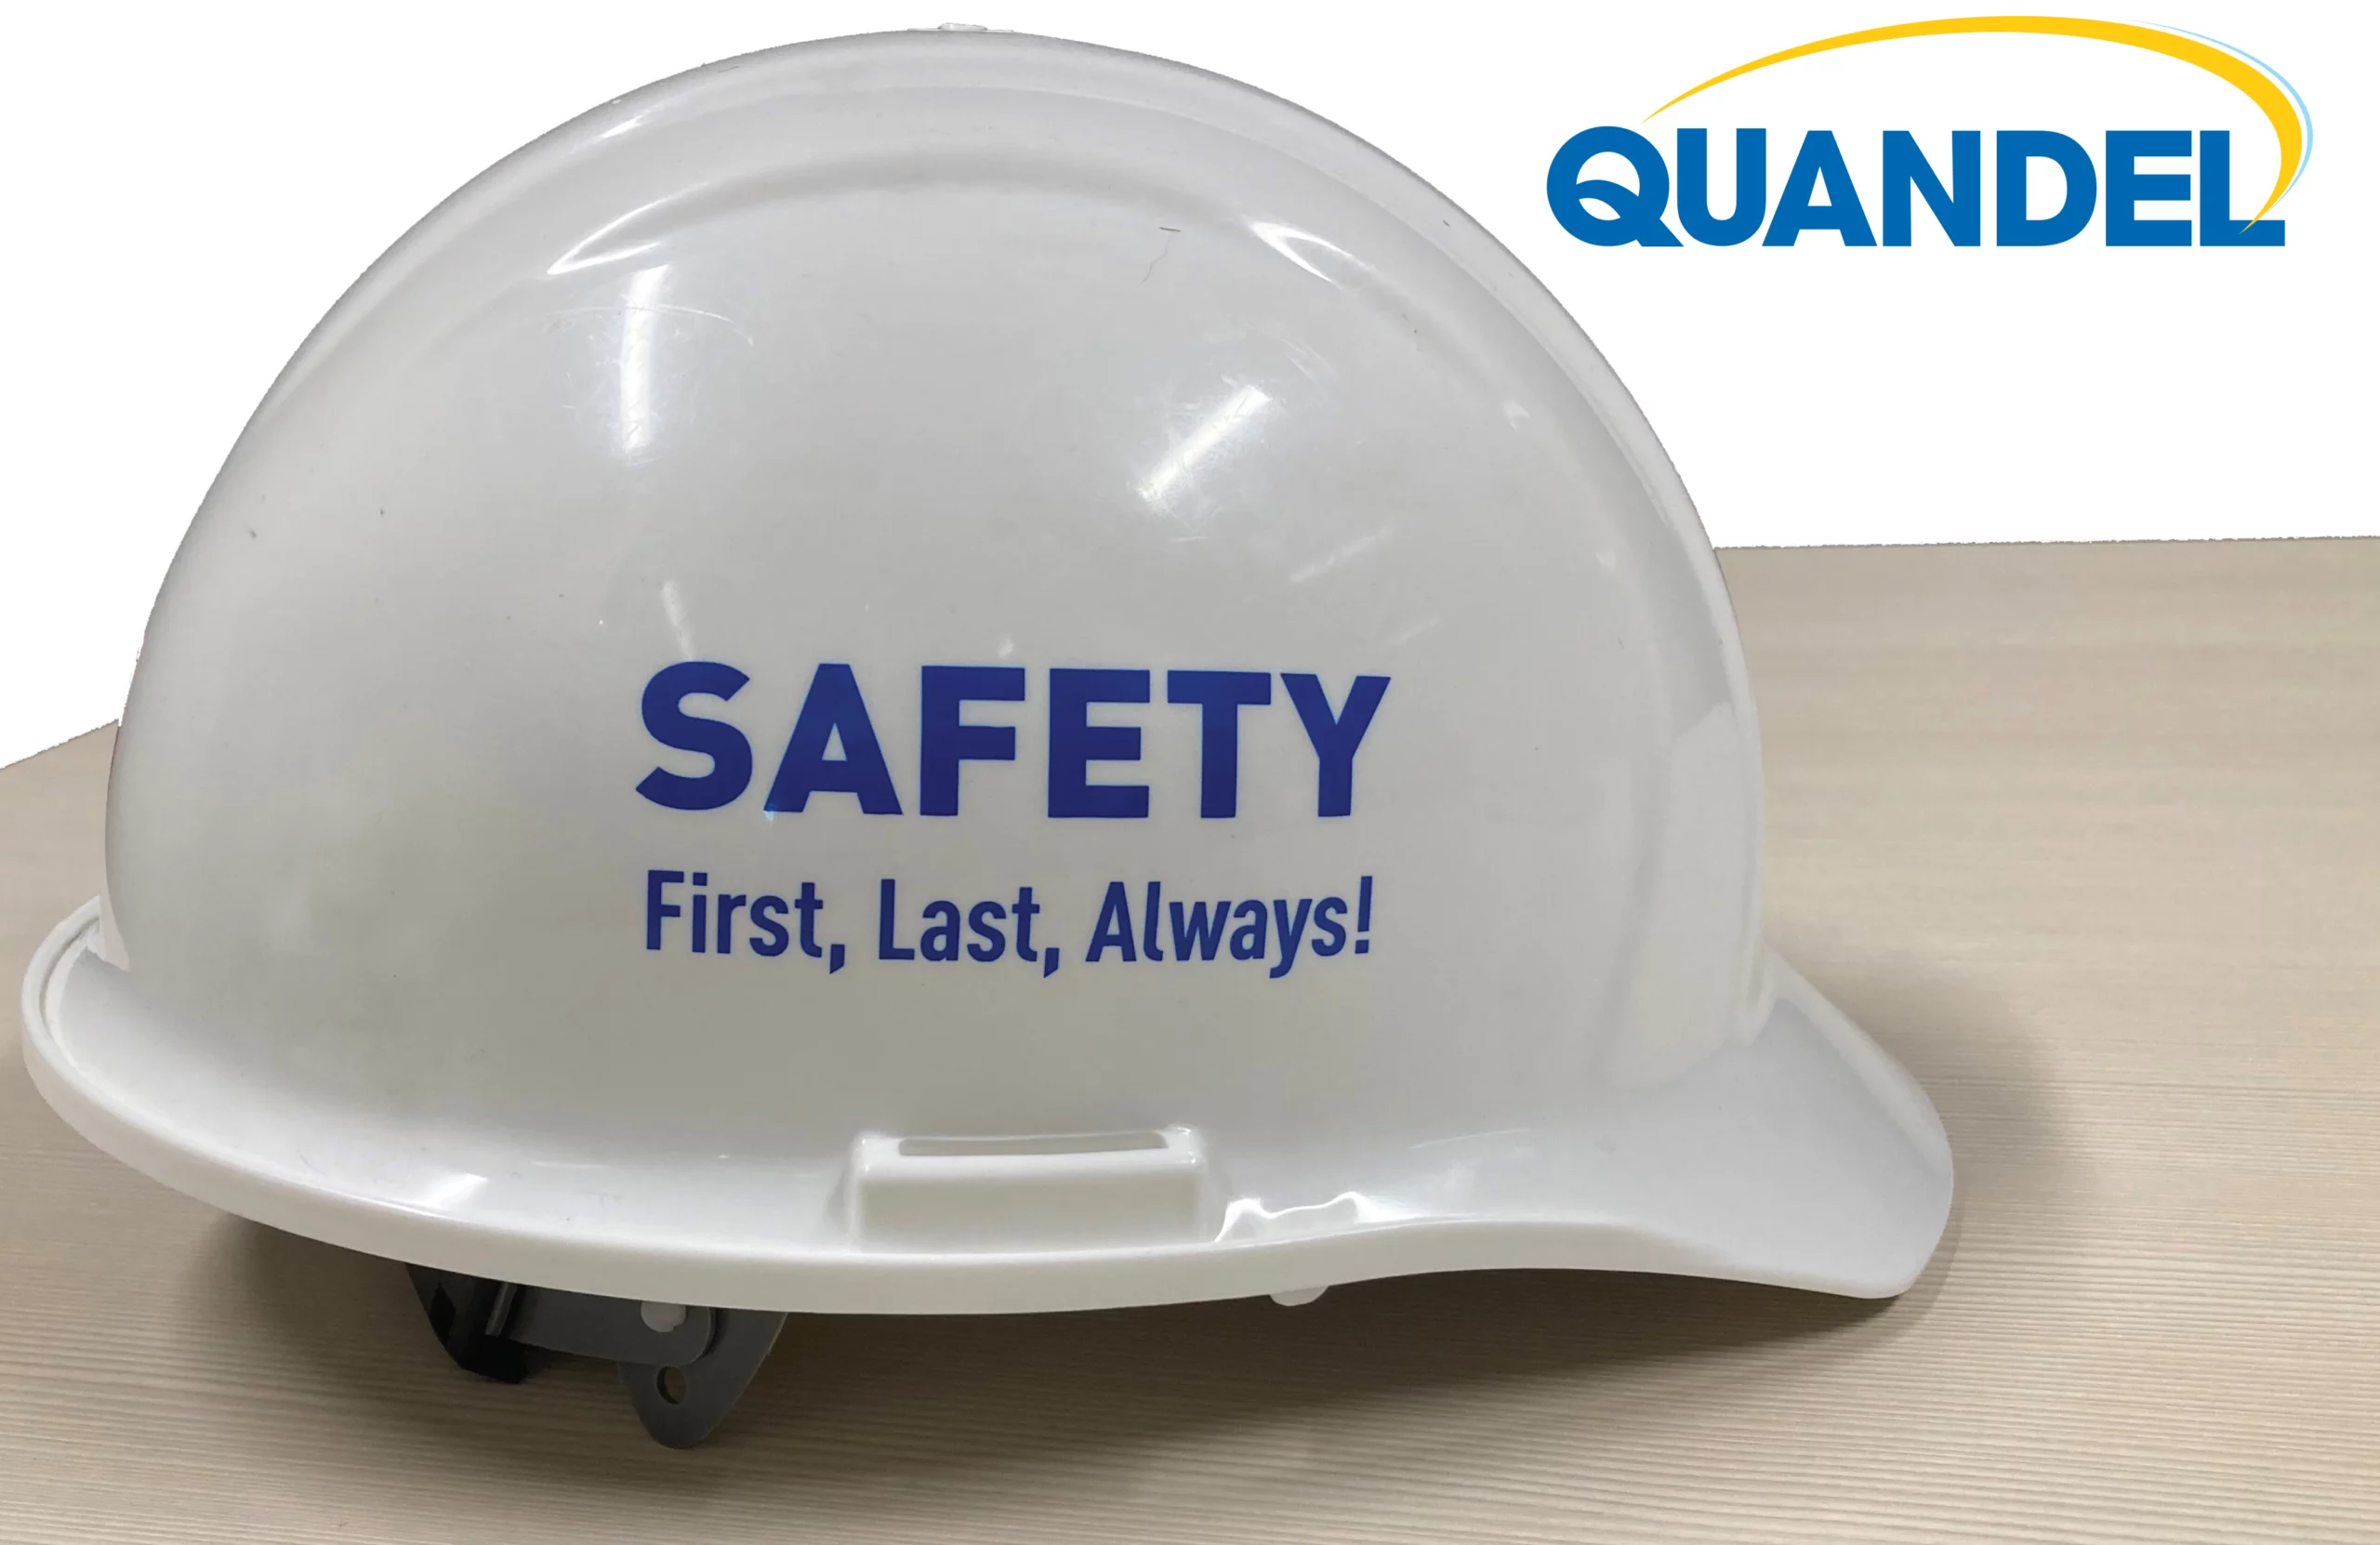 ABC Keystone recognizes Quandel's safety efforts with the Diamond STEP designation.